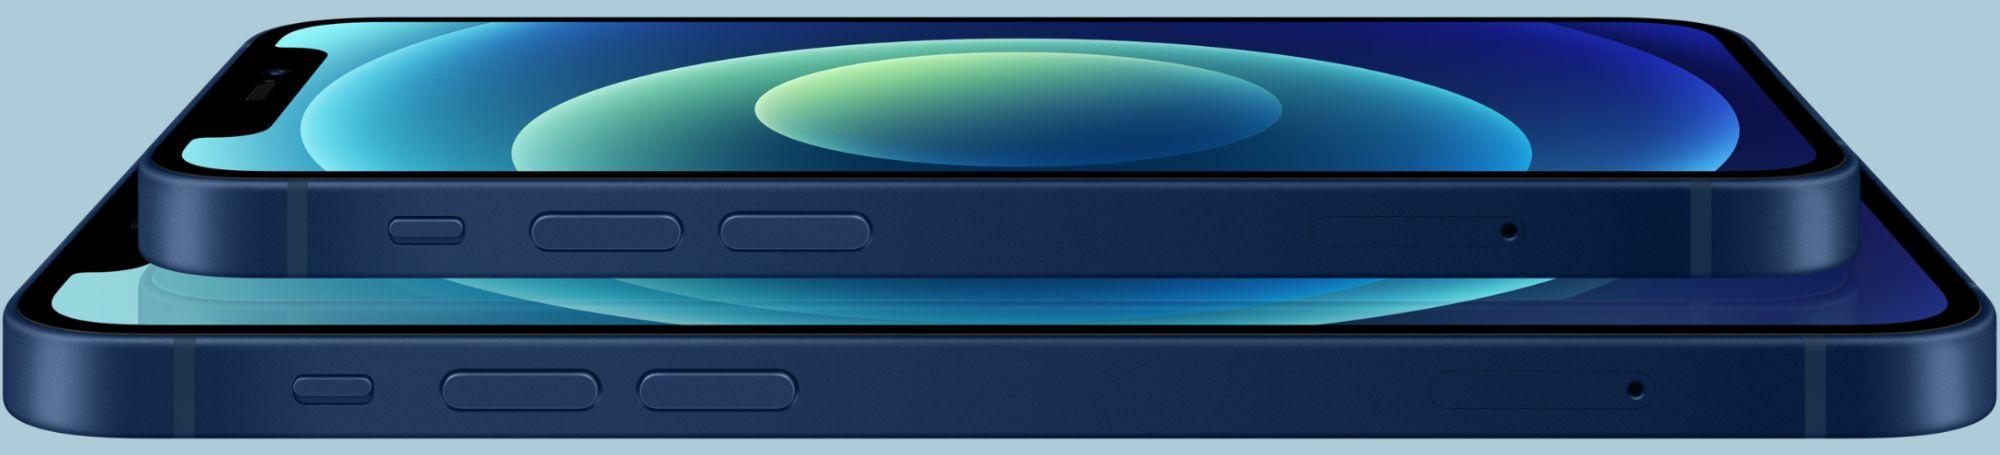 Apple iPhone 12 Bleu 128 Go image 8 | Rakuten